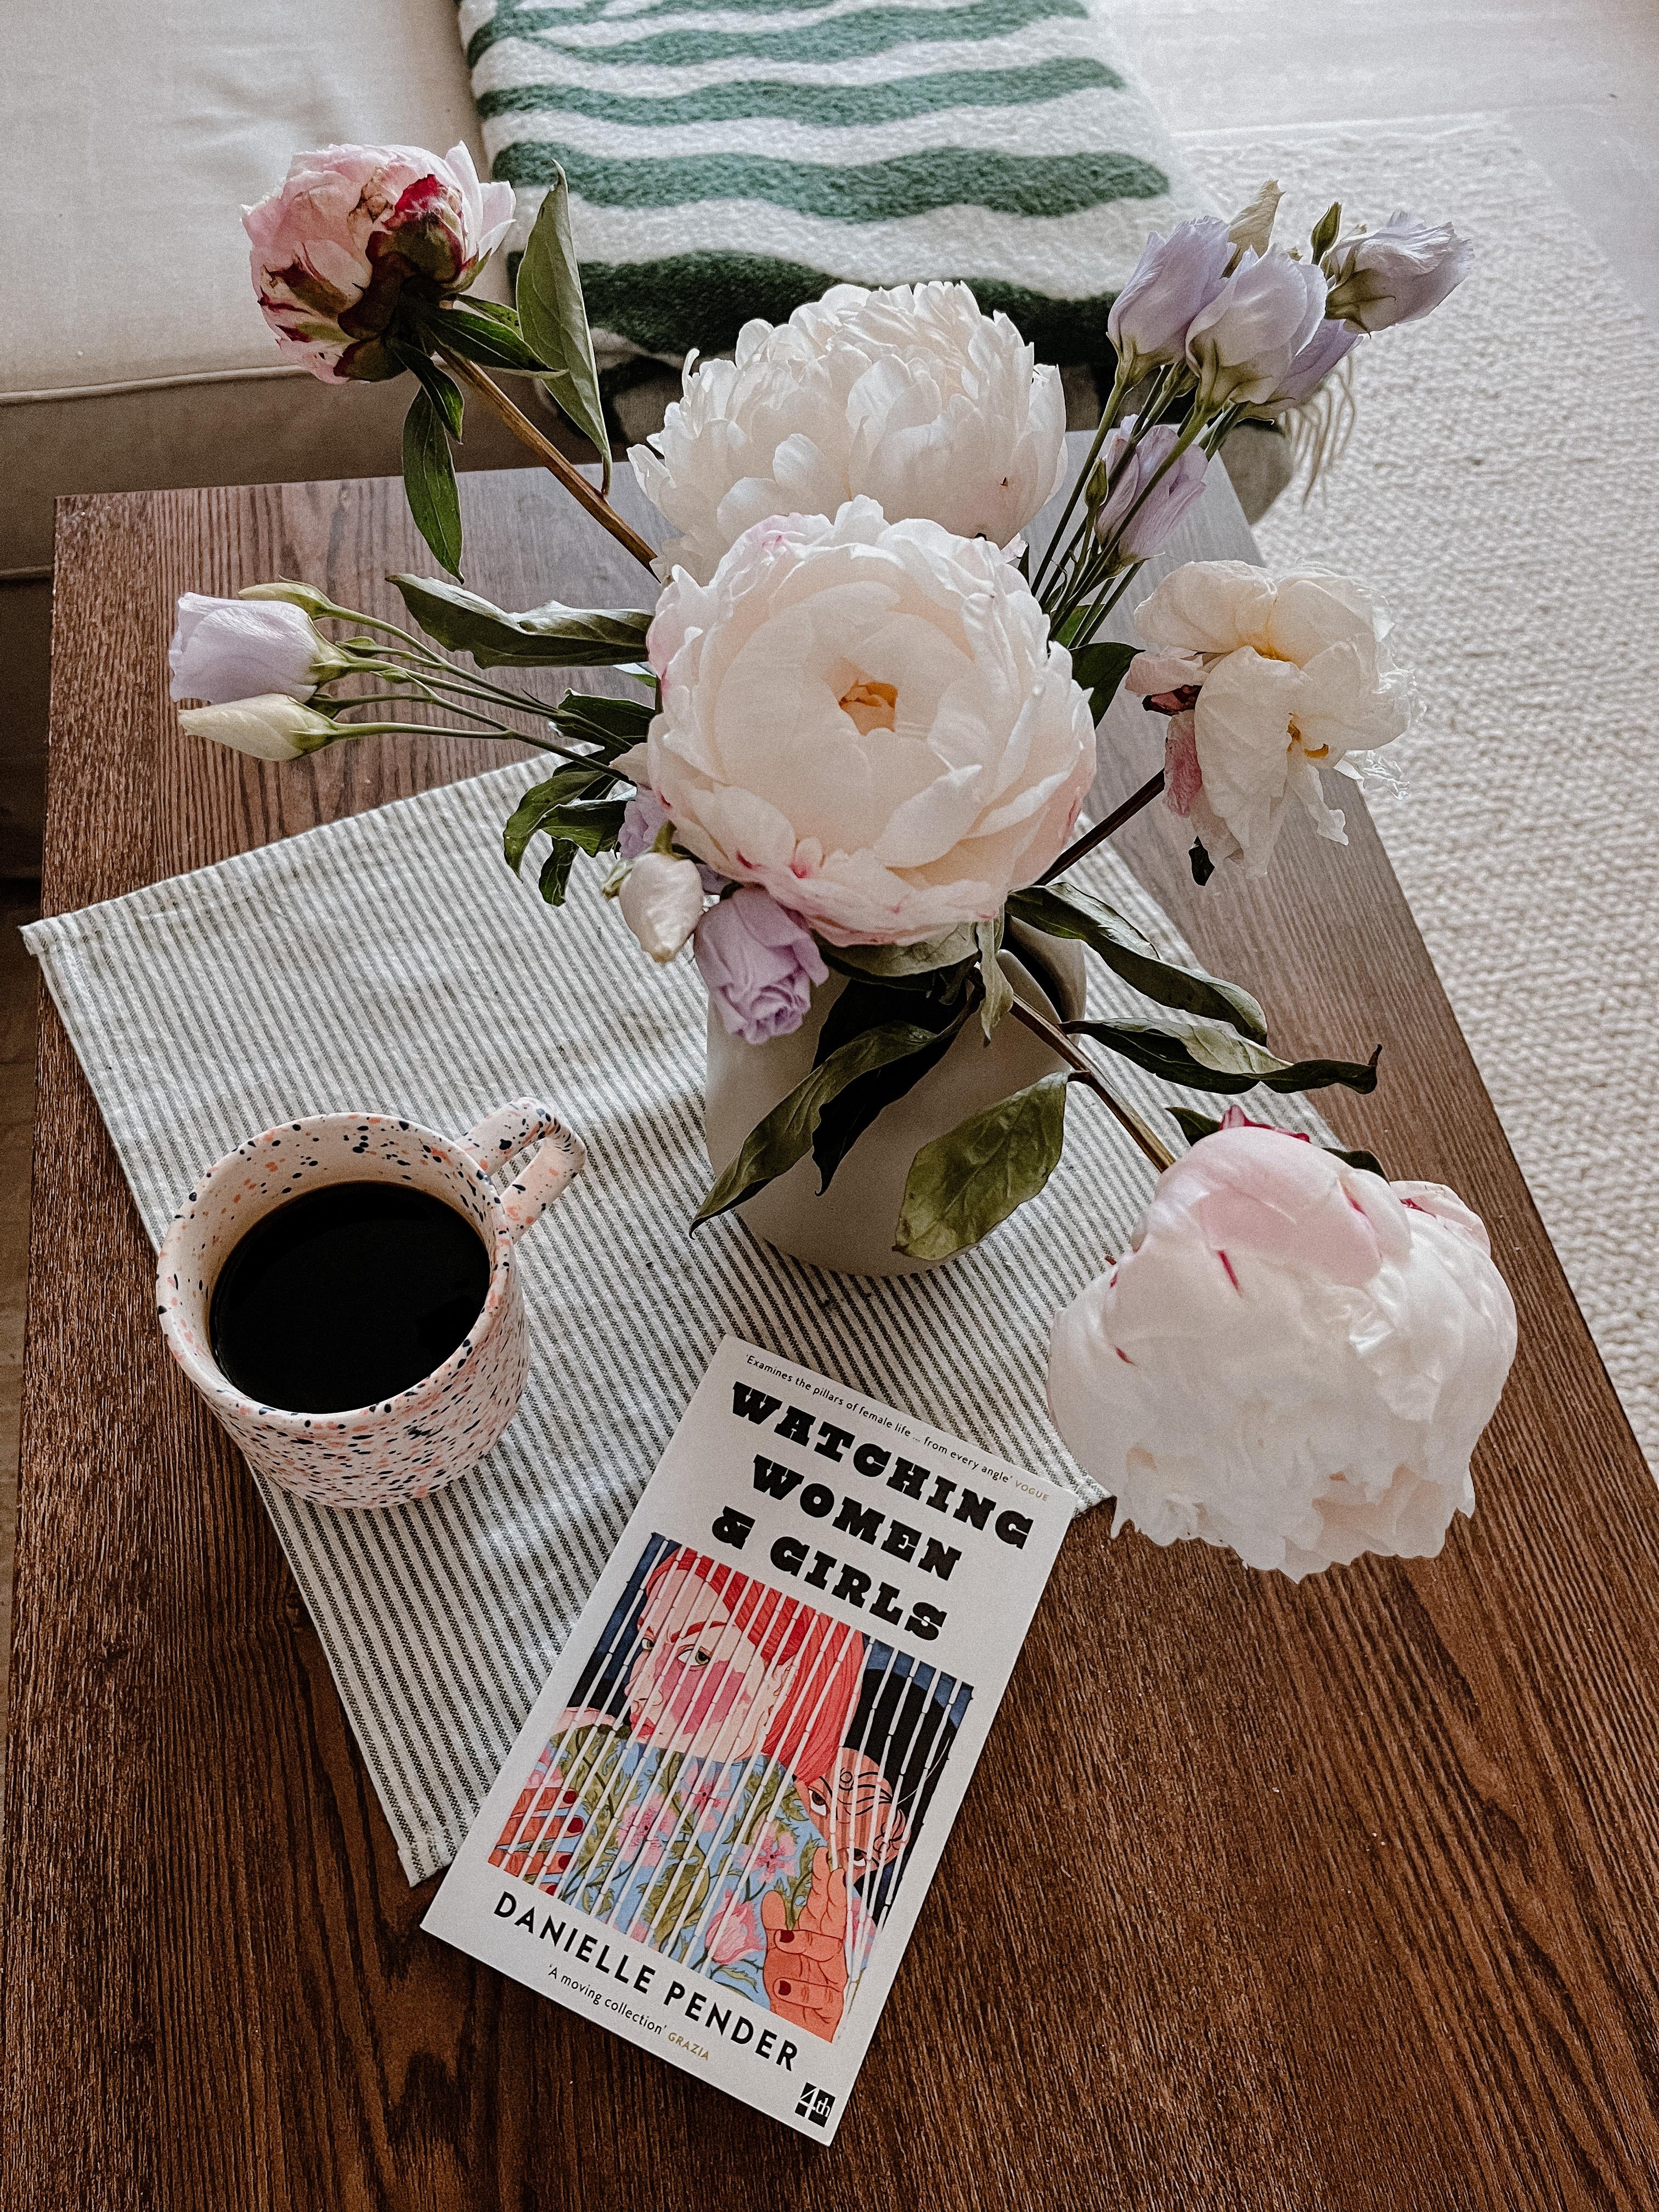 coffee, books & flowers 🫶🏽
#livingchallenge #auszeit 